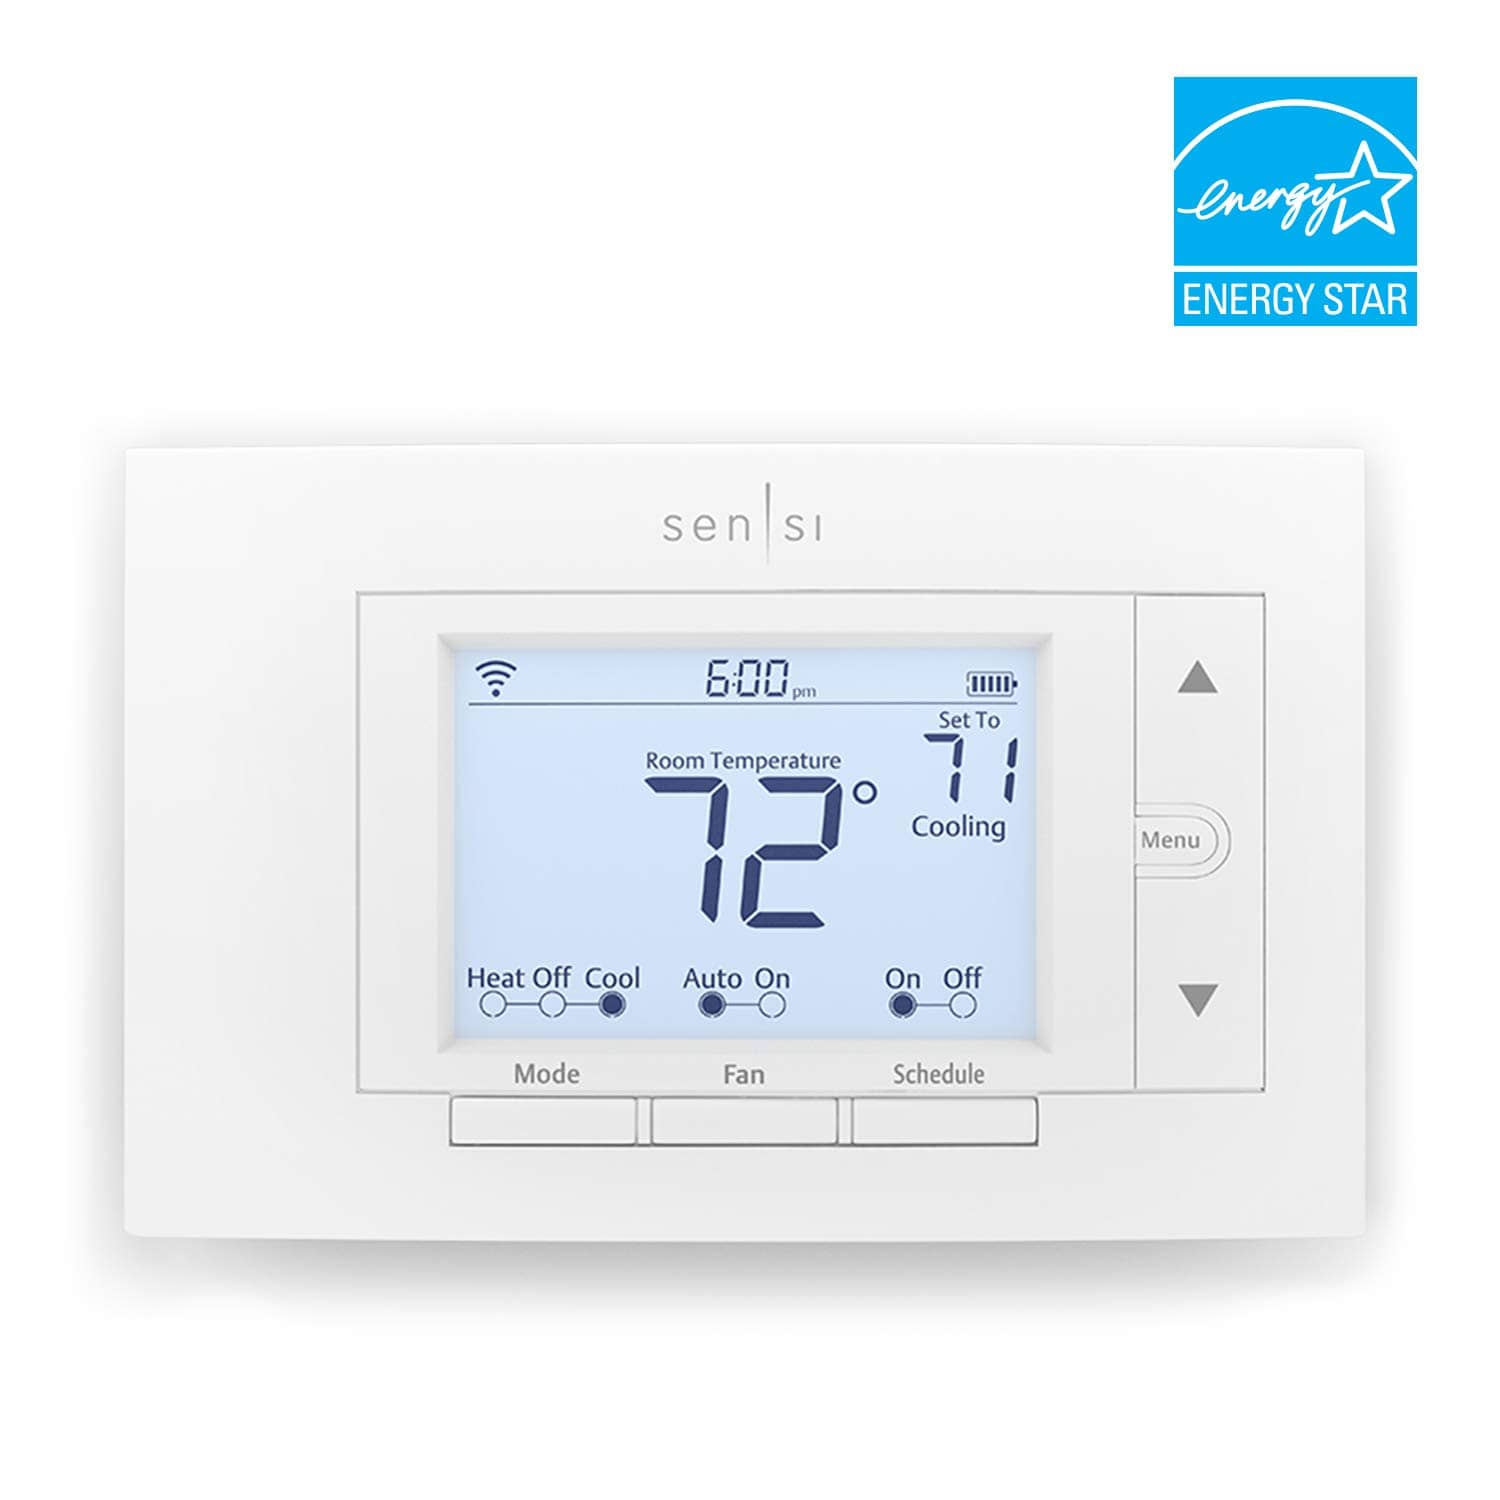 Emerson sensi Wi-fi Smart thermostat